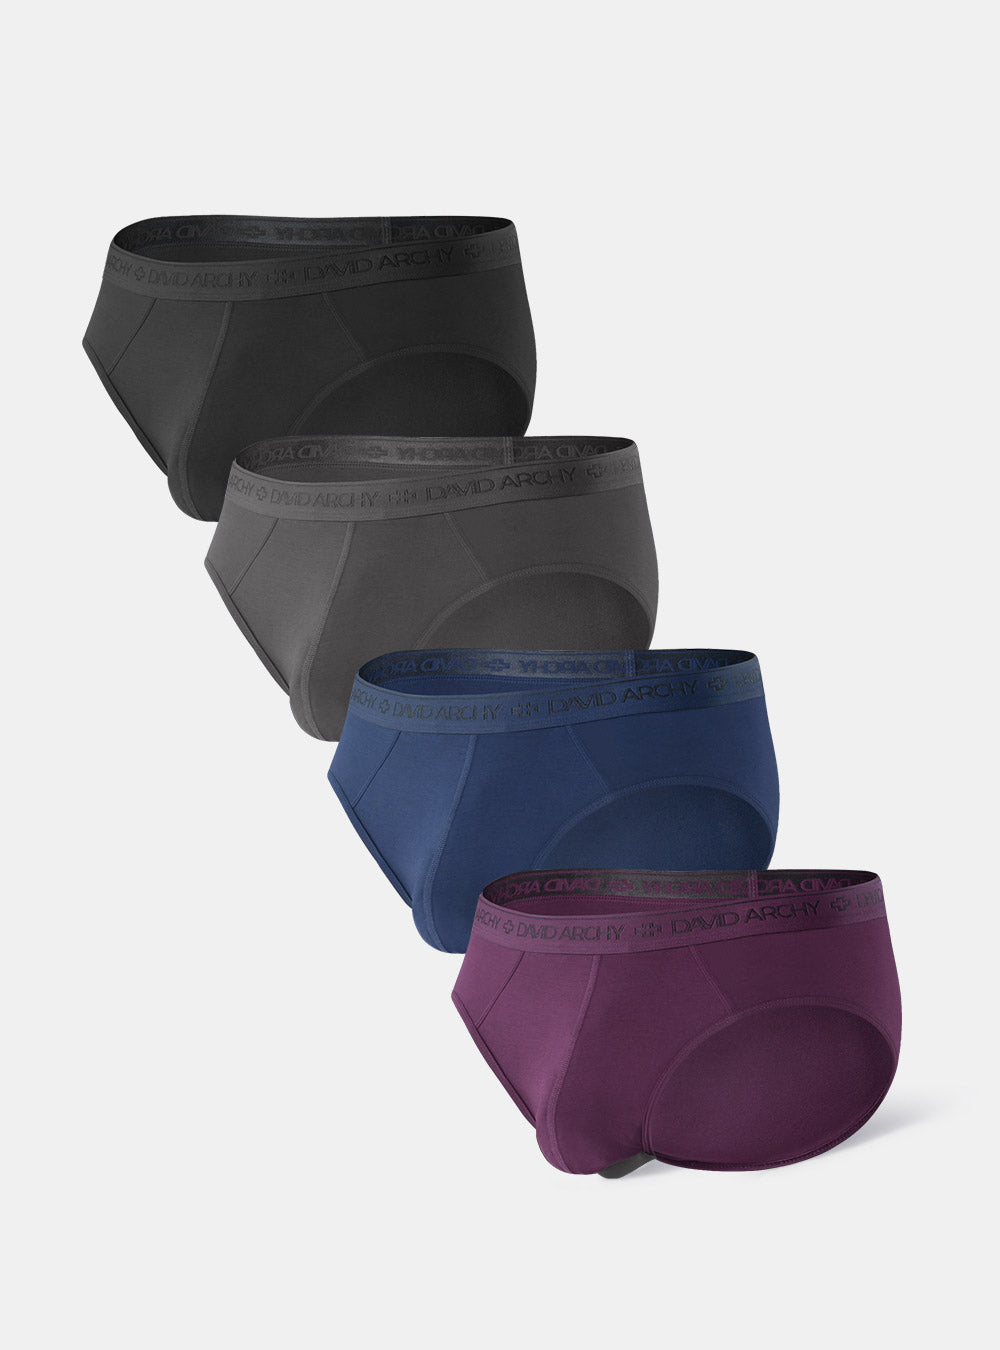 Akiihool Men's Underwear Men's Dual Pouch Underwear Micro Modal